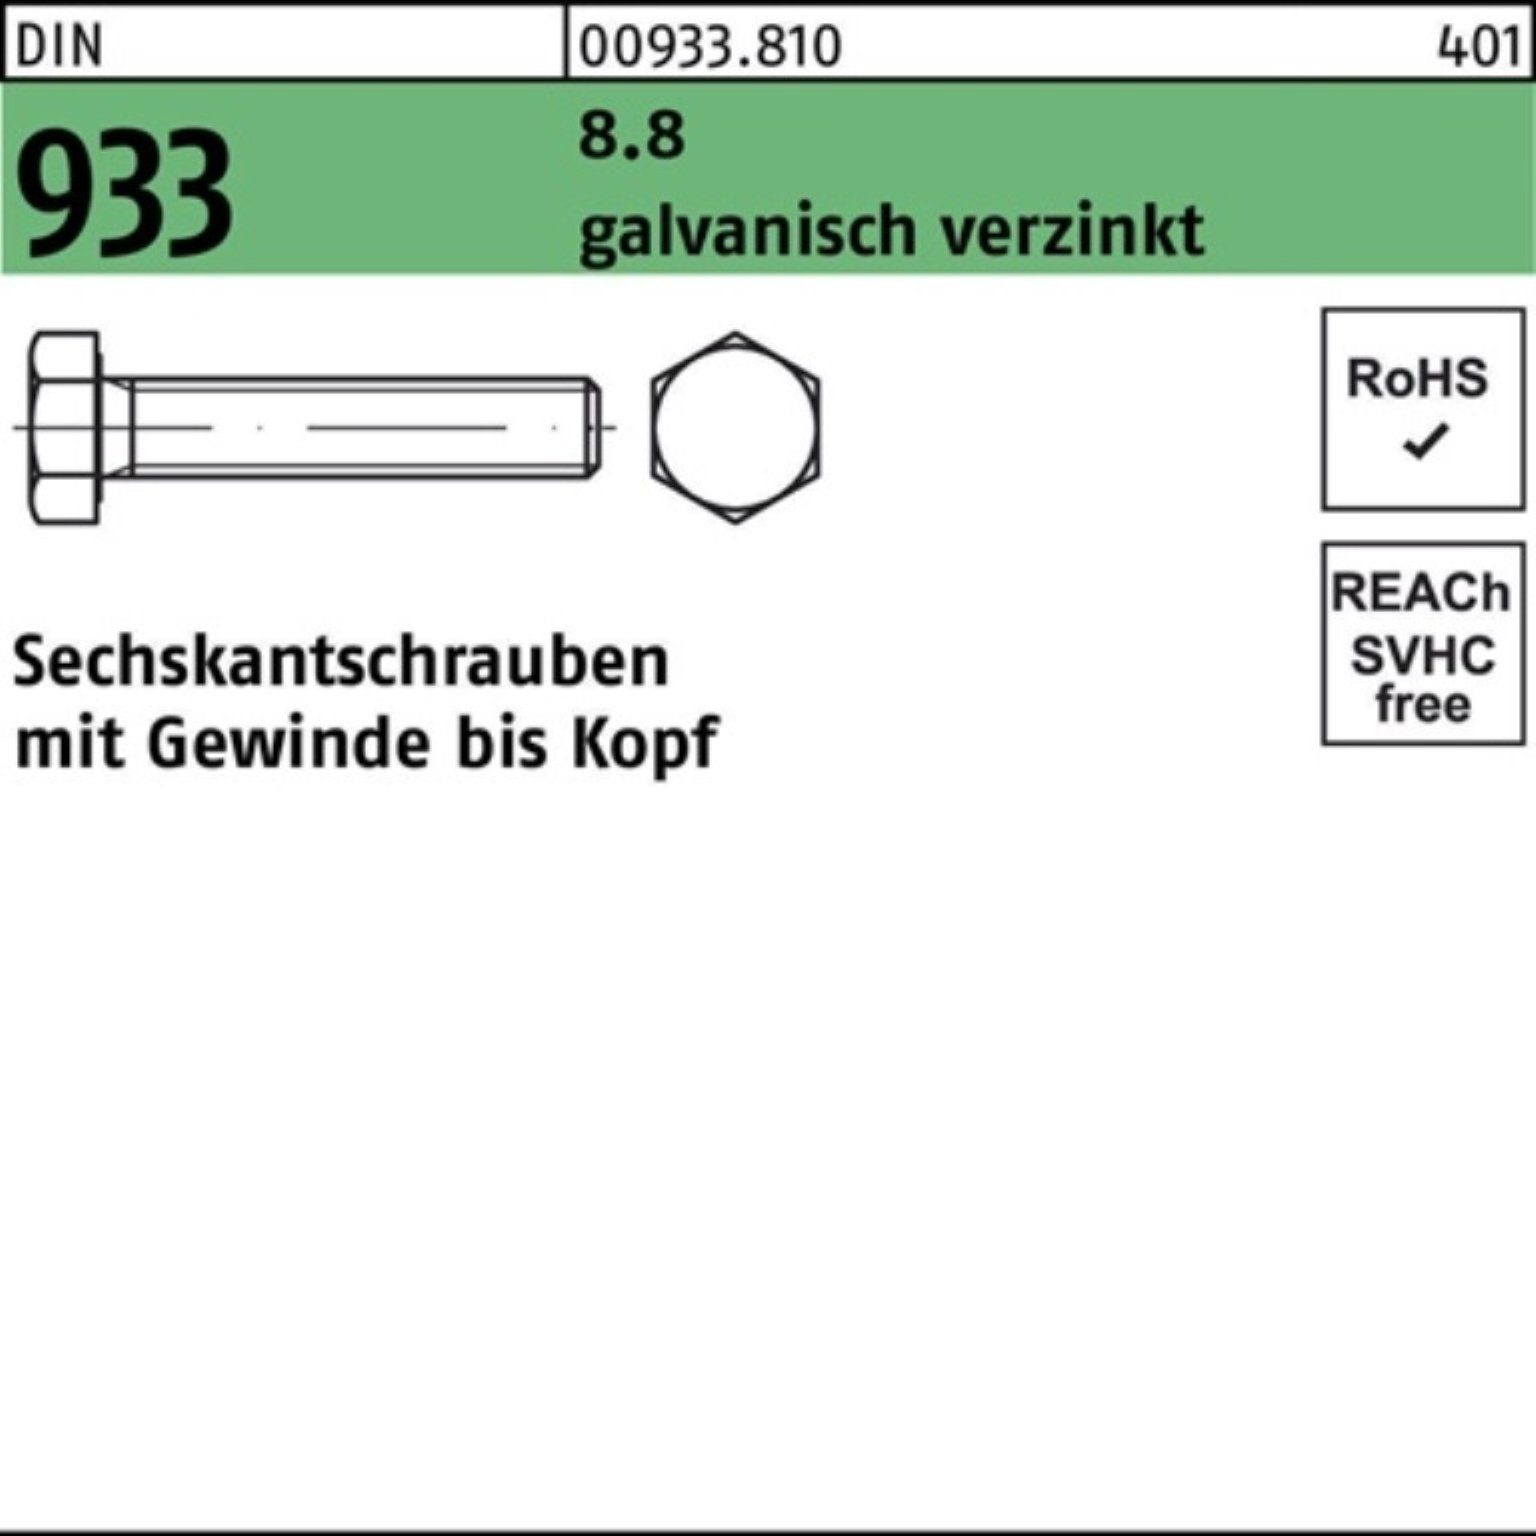 200 VG DIN Sechskantschraube 8.8 galv.verz. Reyher M8x Stü Sechskantschraube 16 Pack 933 200er